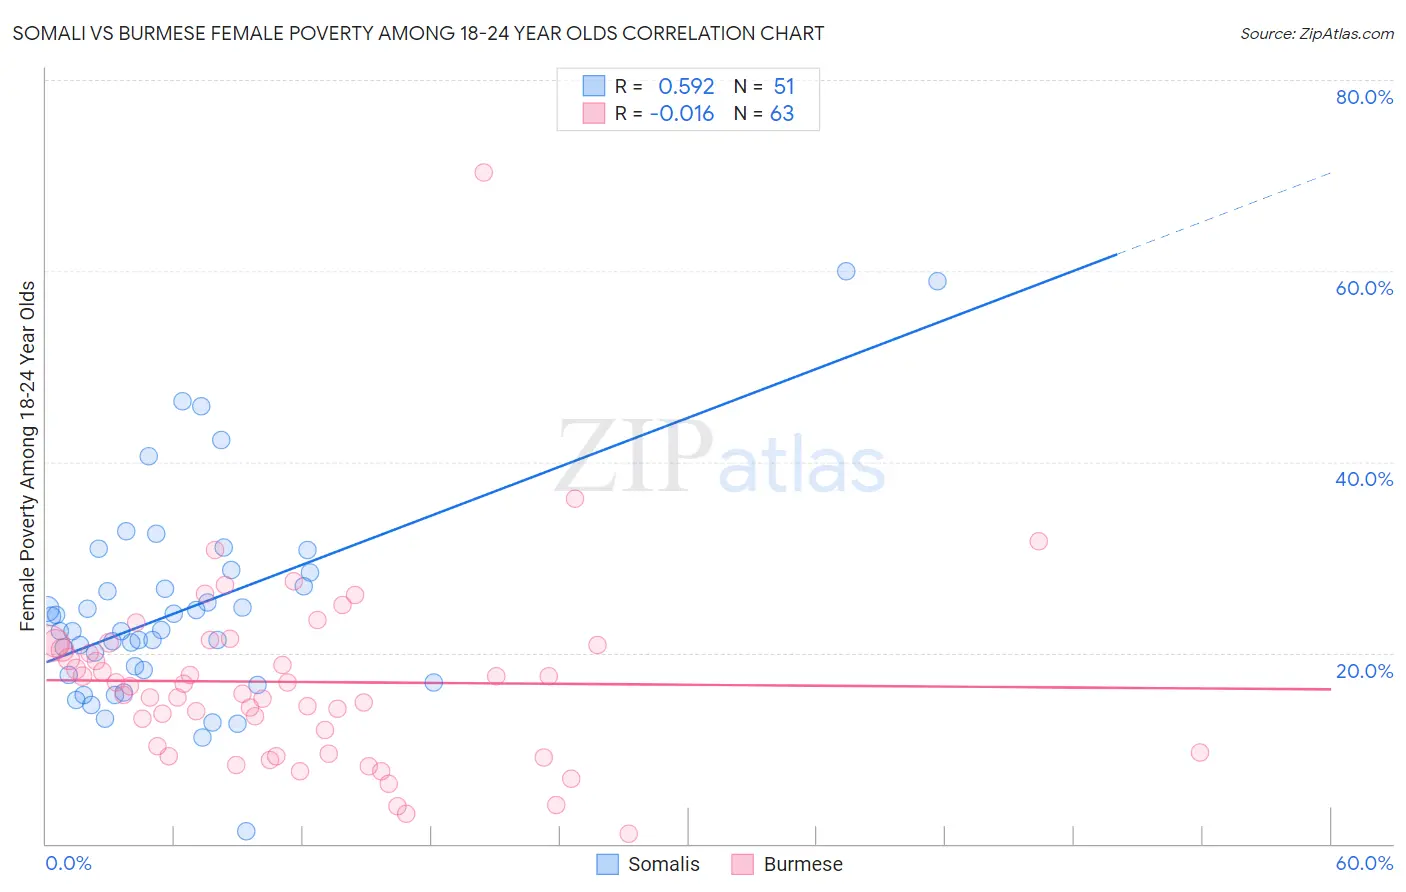 Somali vs Burmese Female Poverty Among 18-24 Year Olds